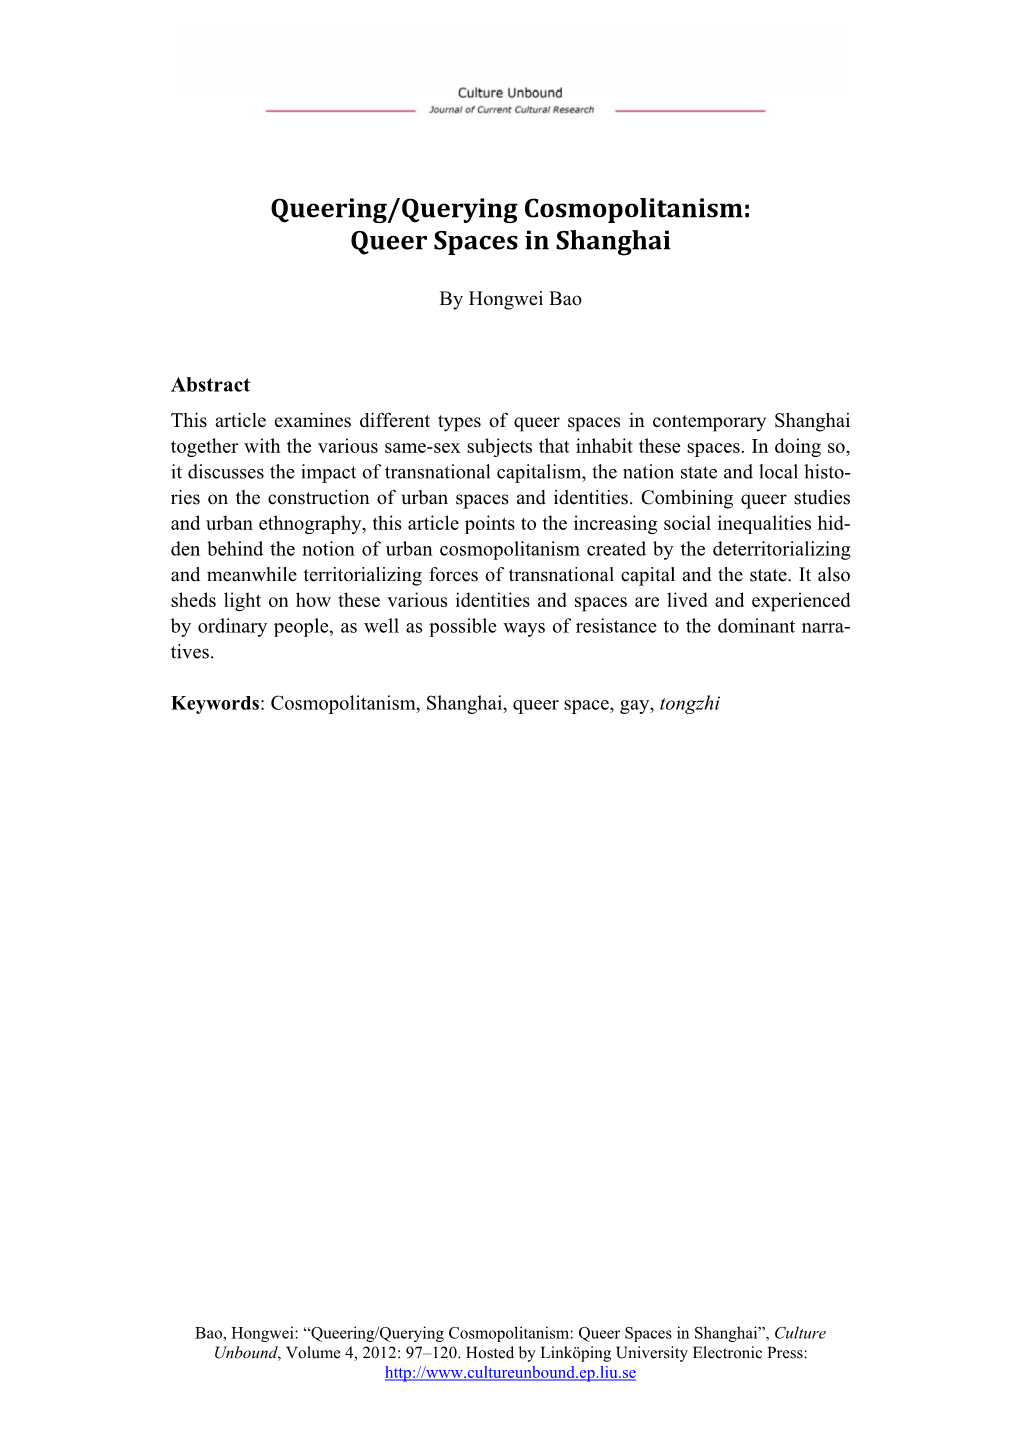 Queering/Querying Cosmopolitanism: Queer Spaces in Shanghai